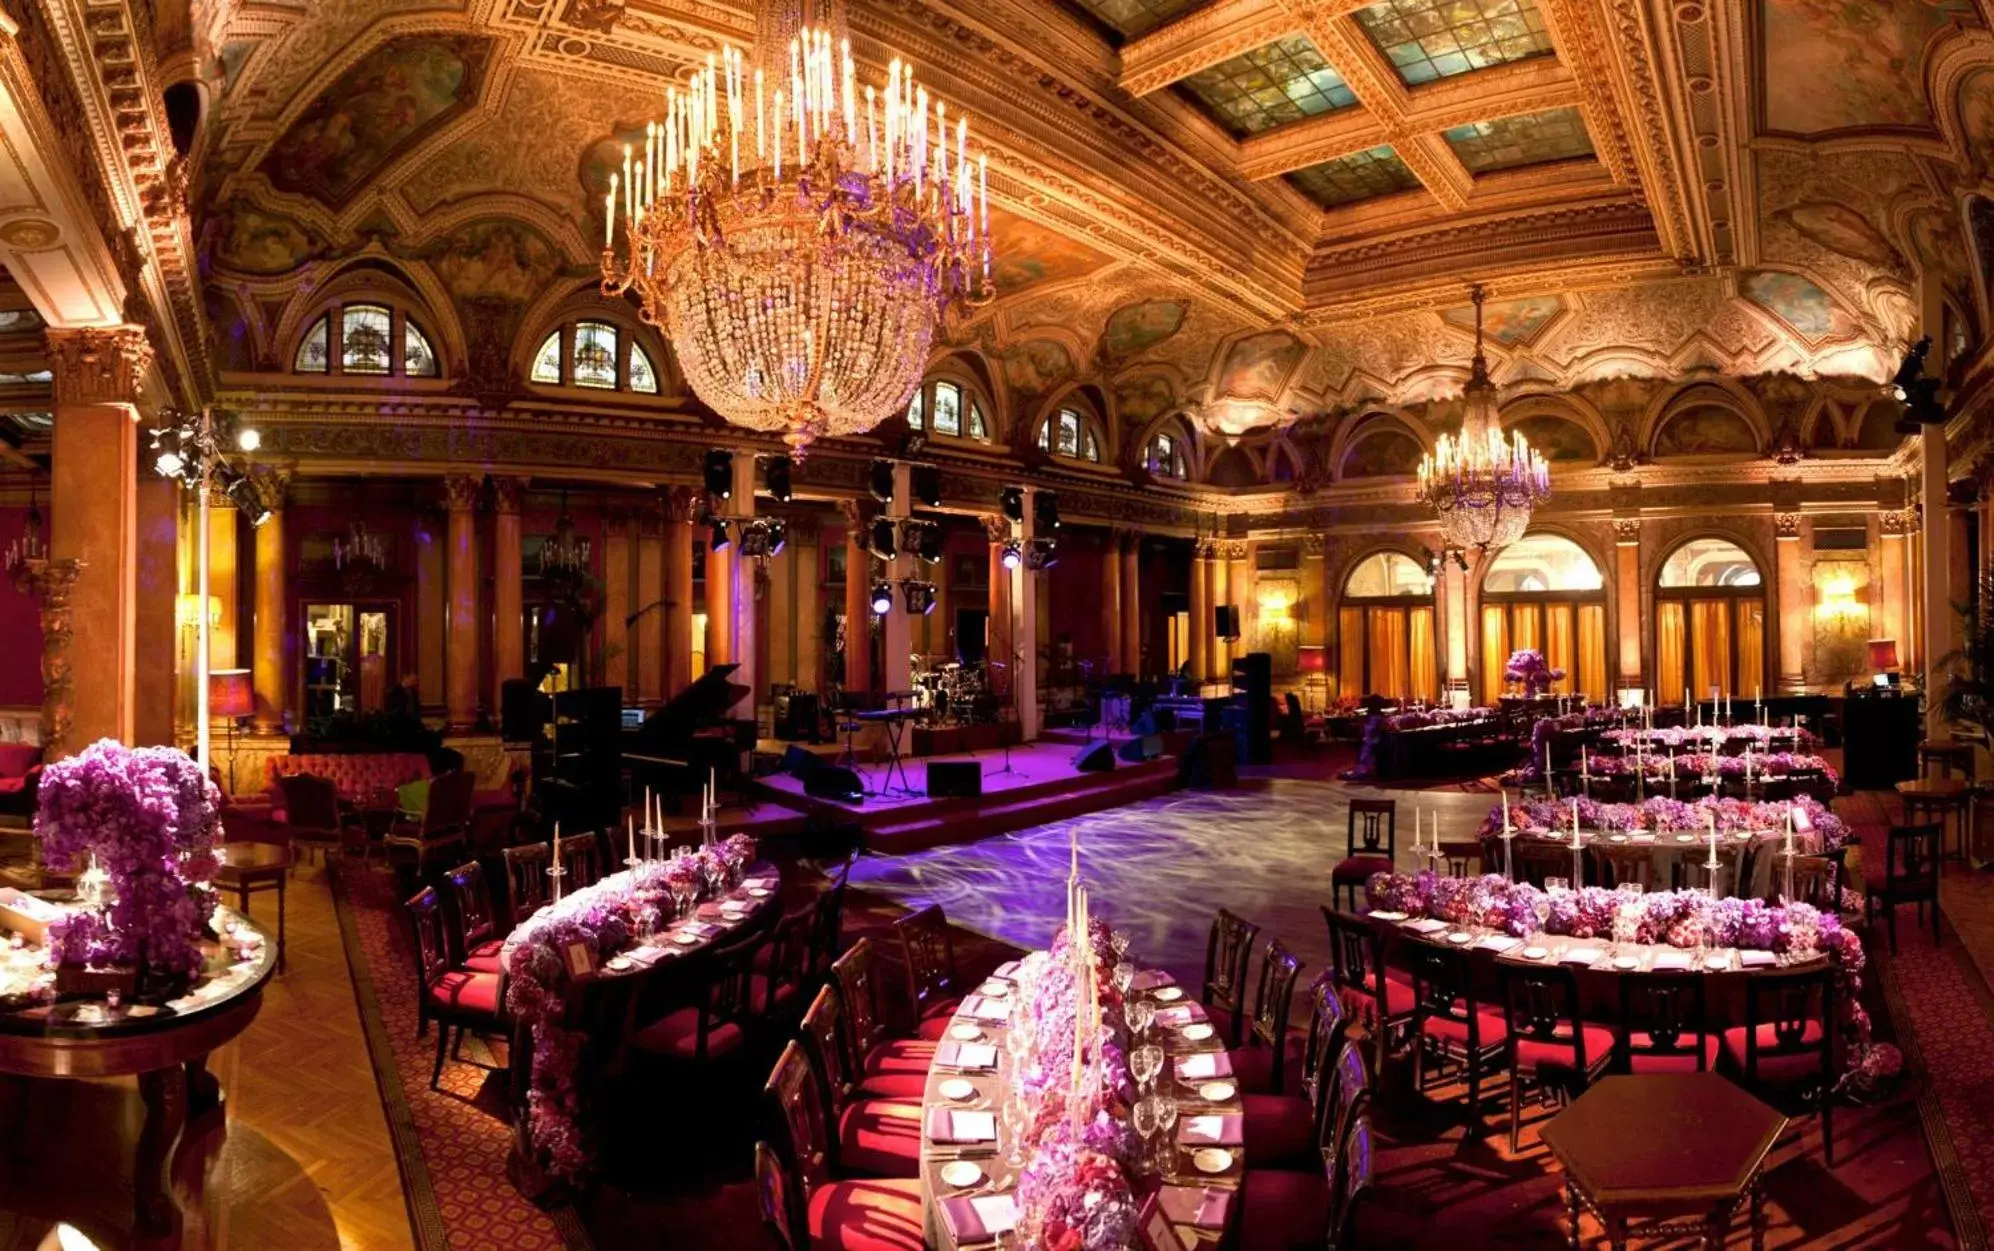 Banquet/Function facilities, Banquet Facilities in Grand Hotel Plaza